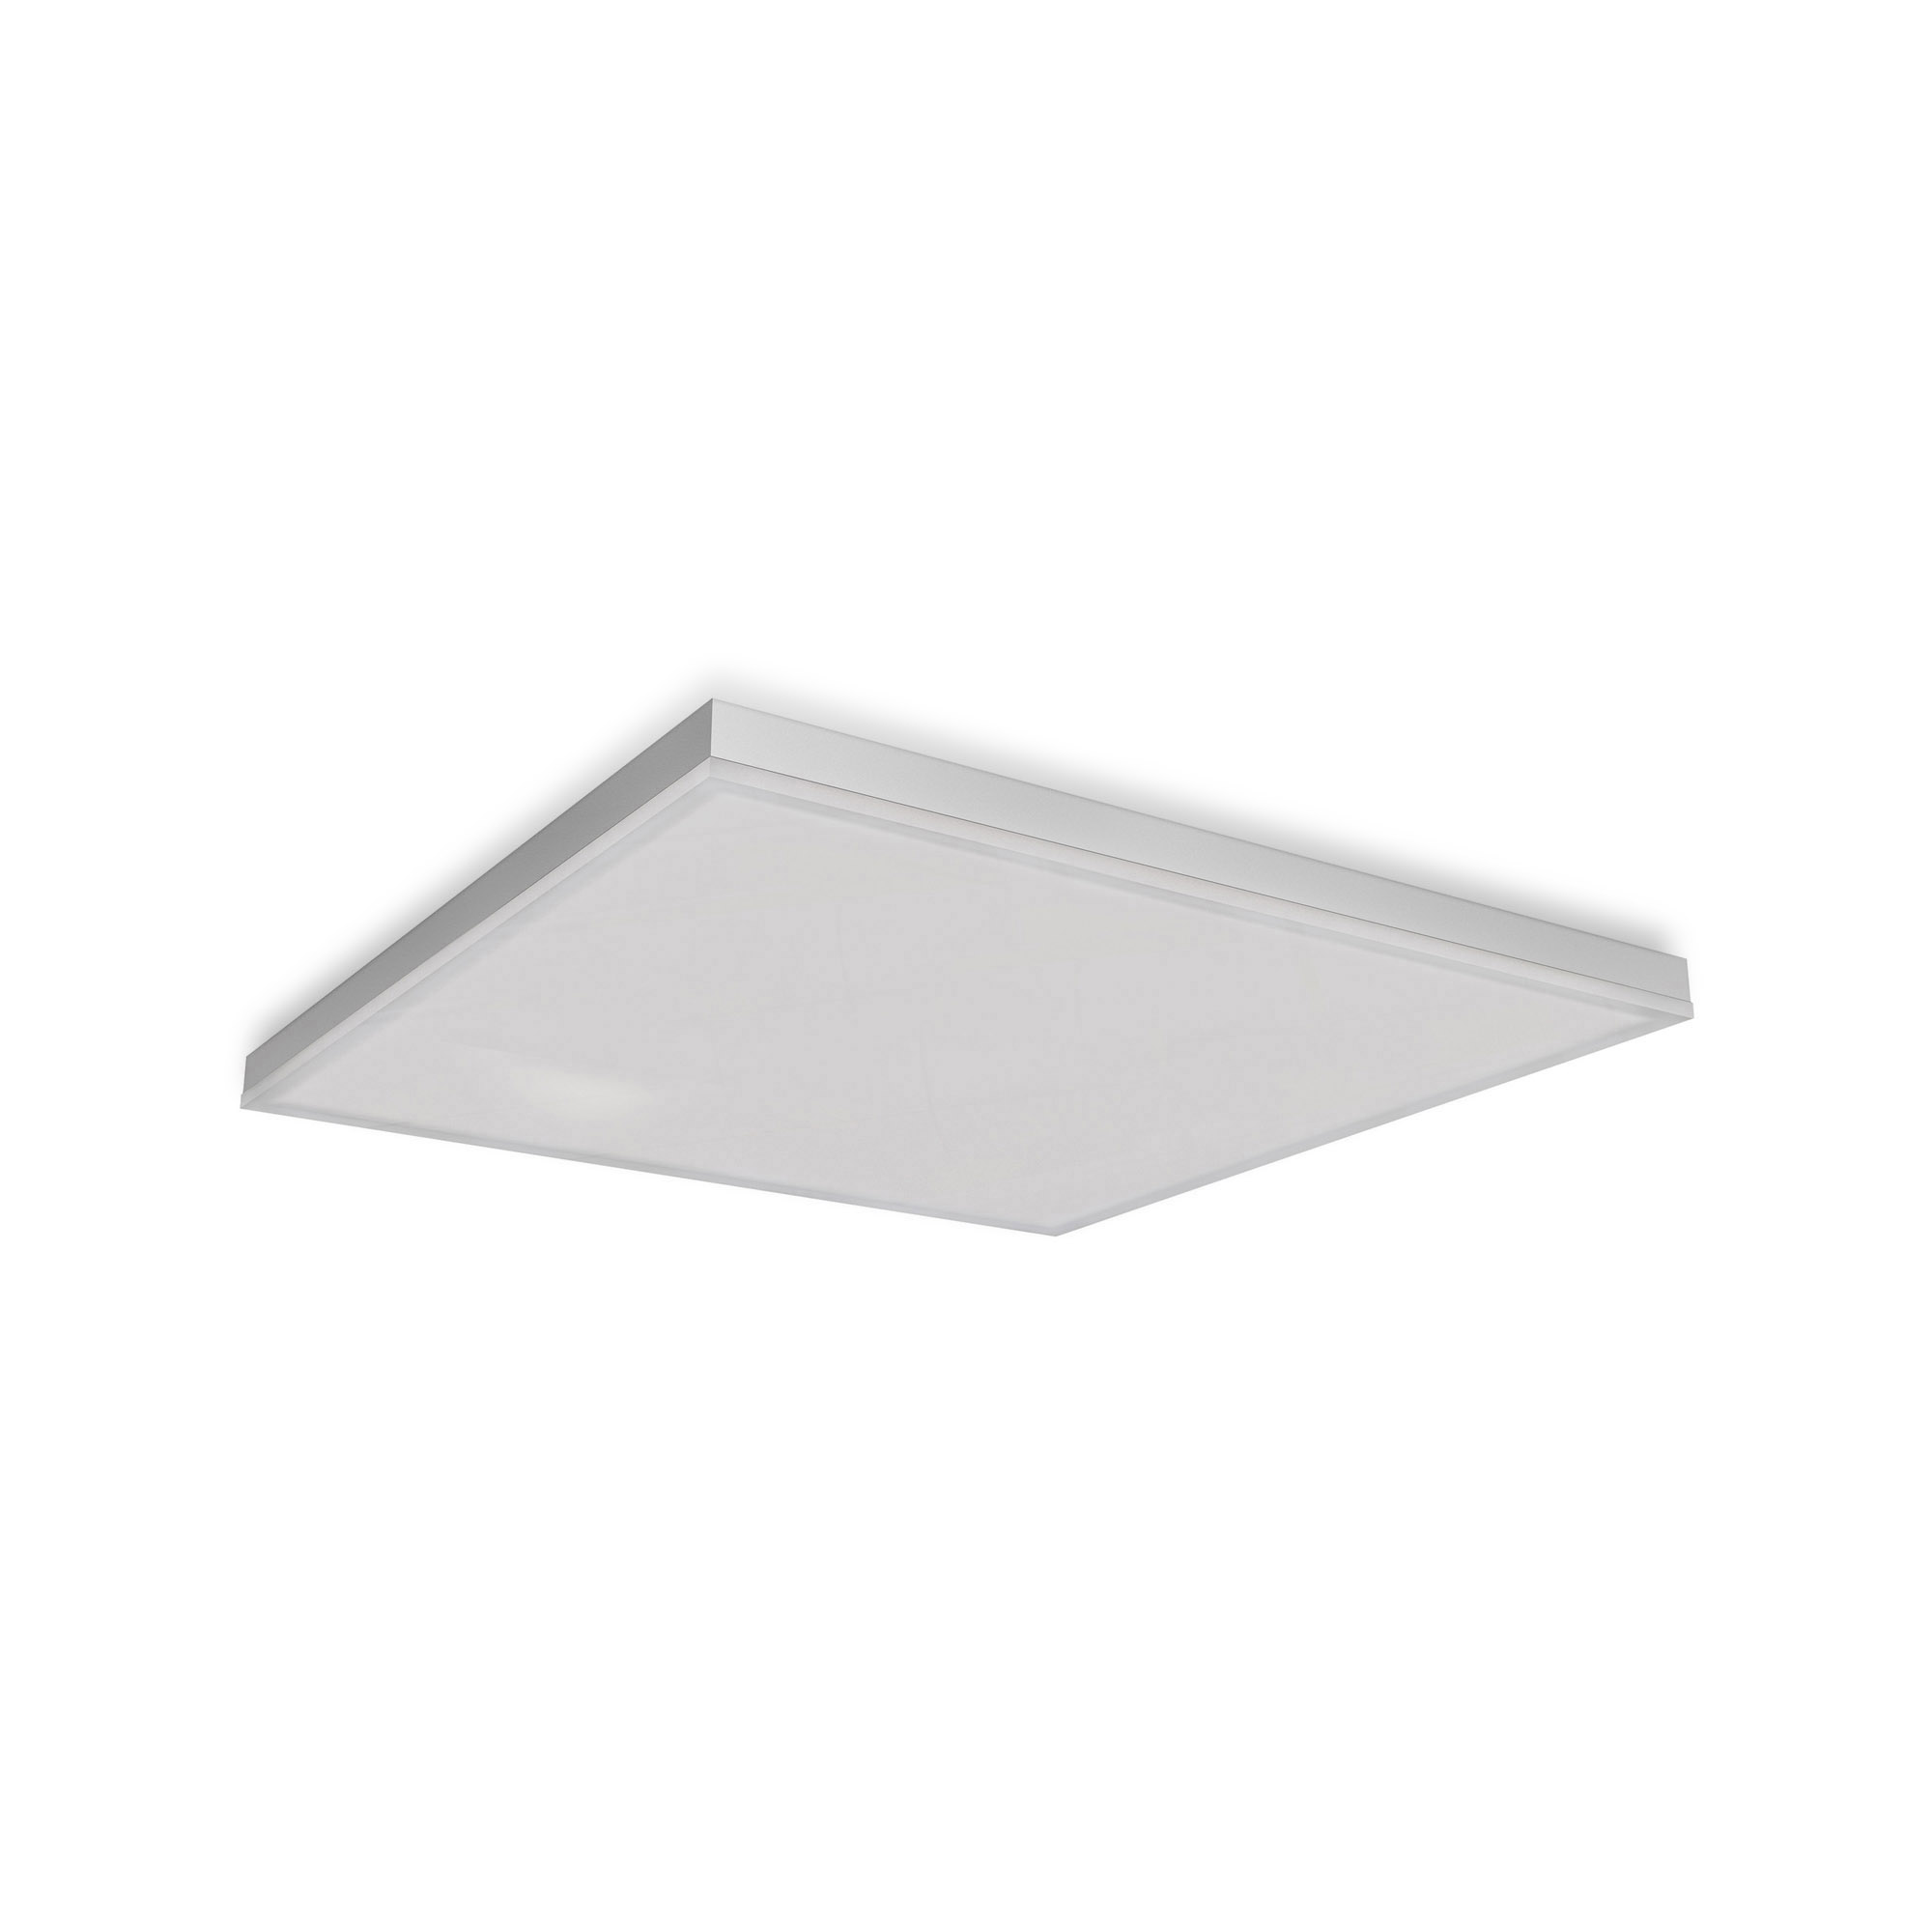 LEDVANCE SMART+ WiFi Tunable White LED Panel PLANON FRAMELESS 45x45cm 2300lm